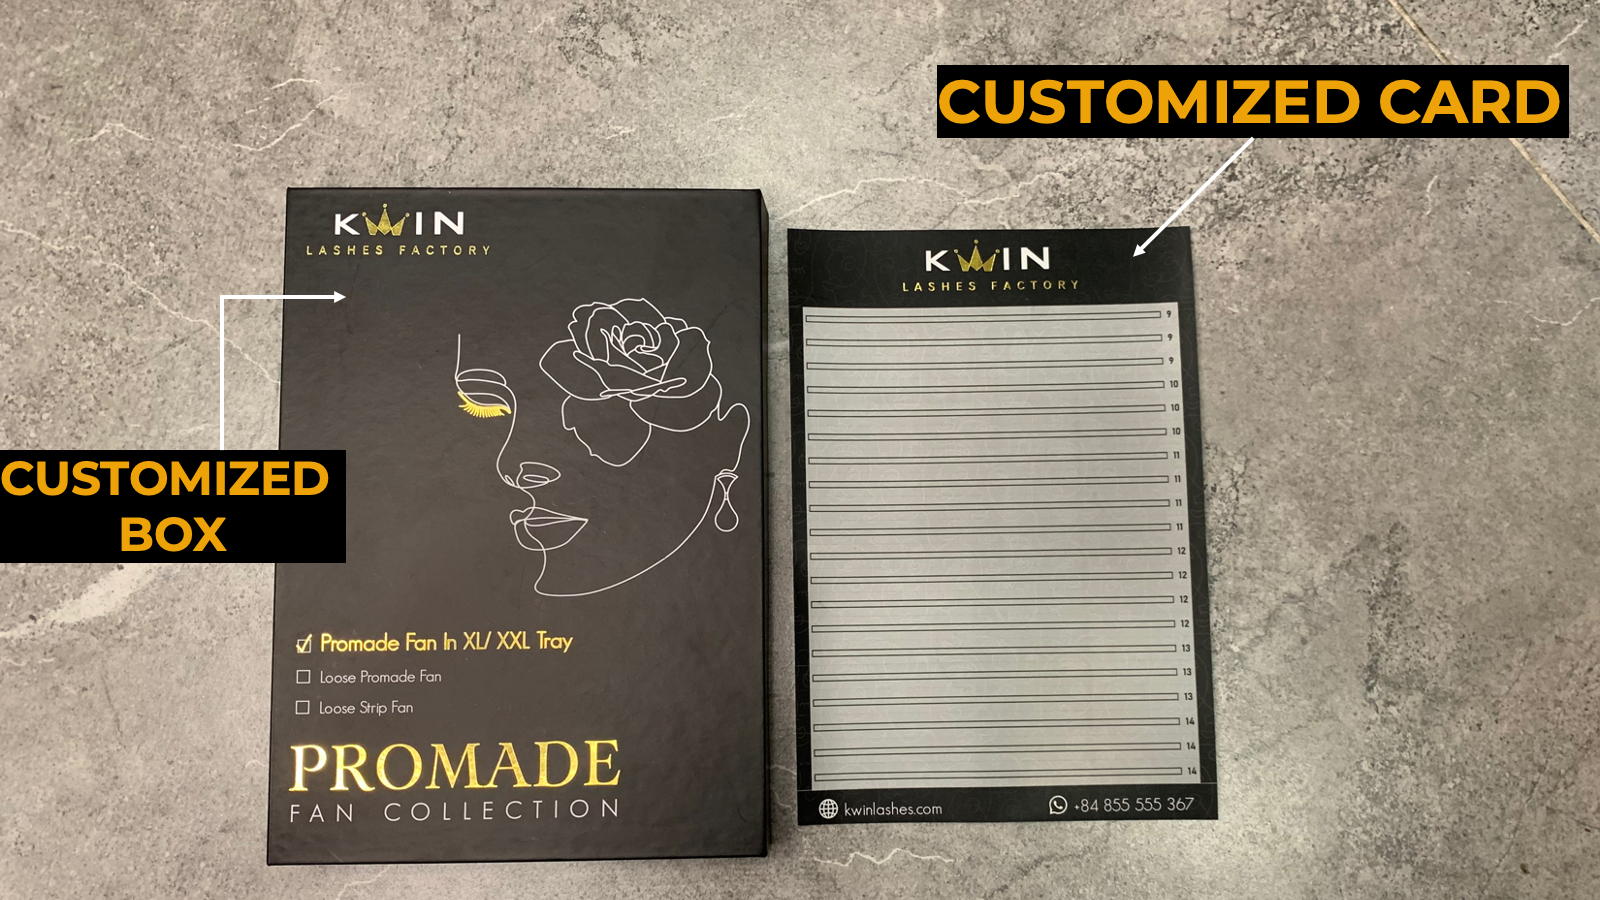 Customized lash box and customized lash card